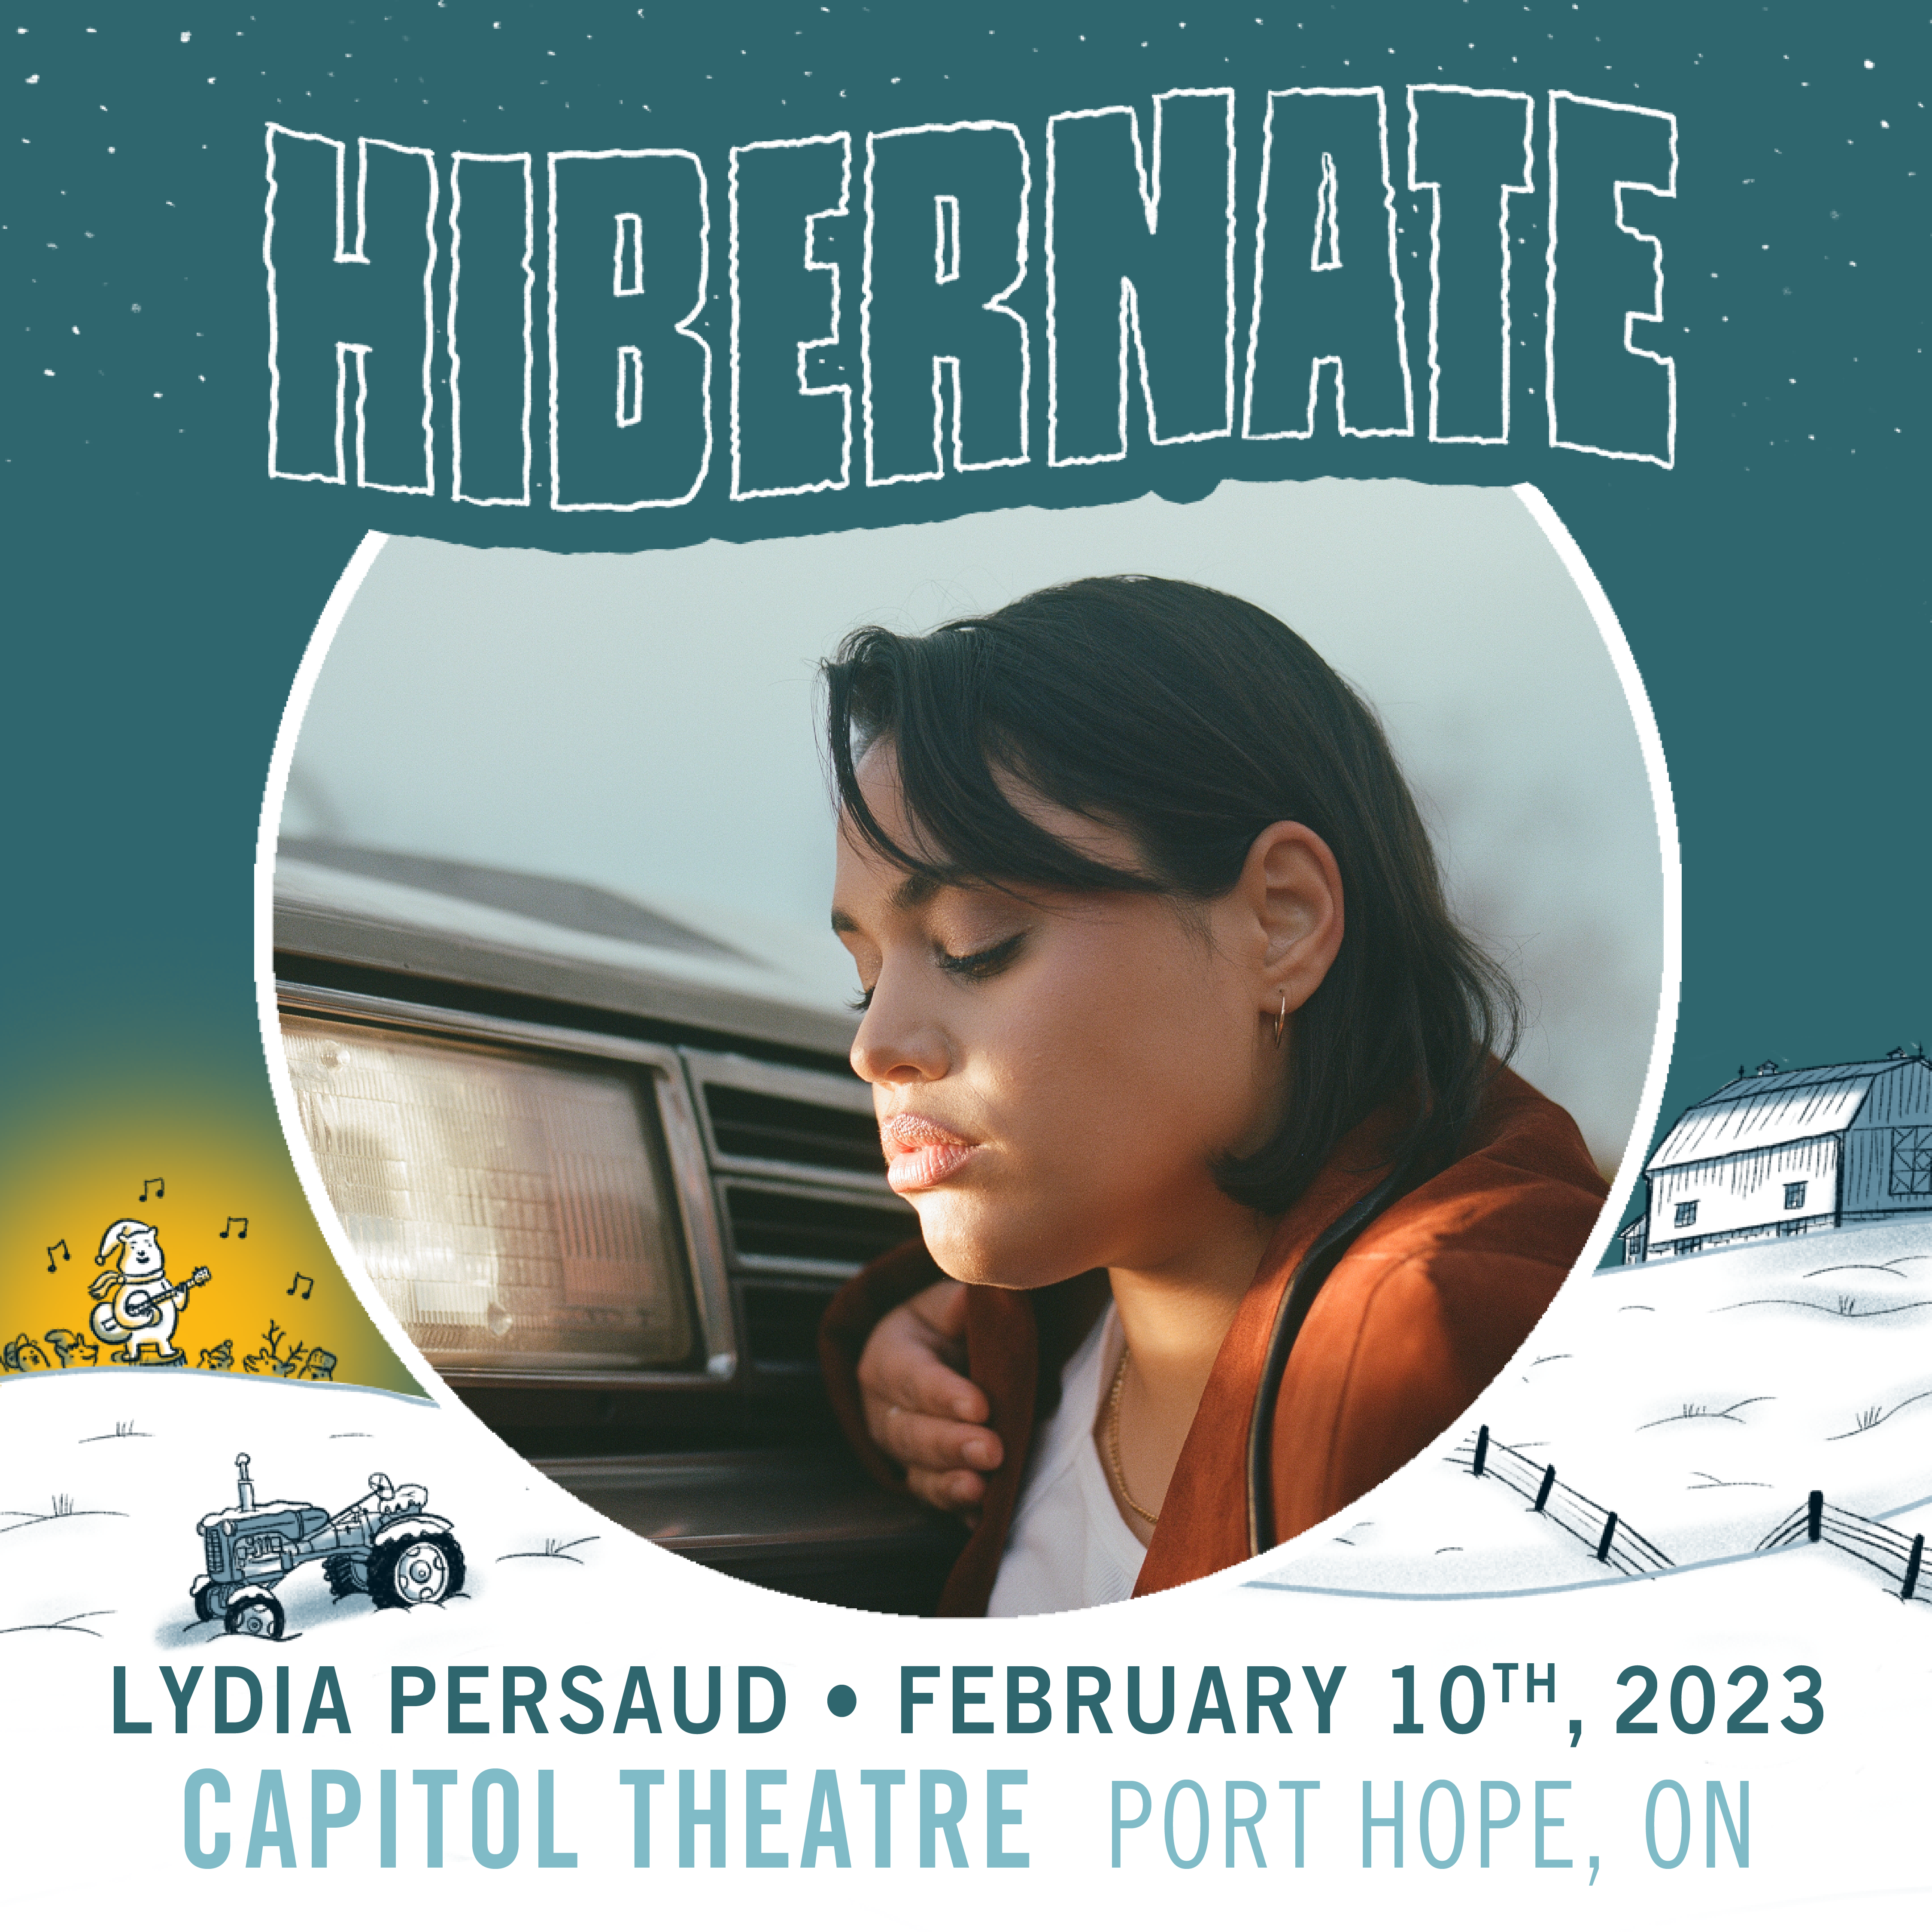 Lydia Persaud HIbernate Promo